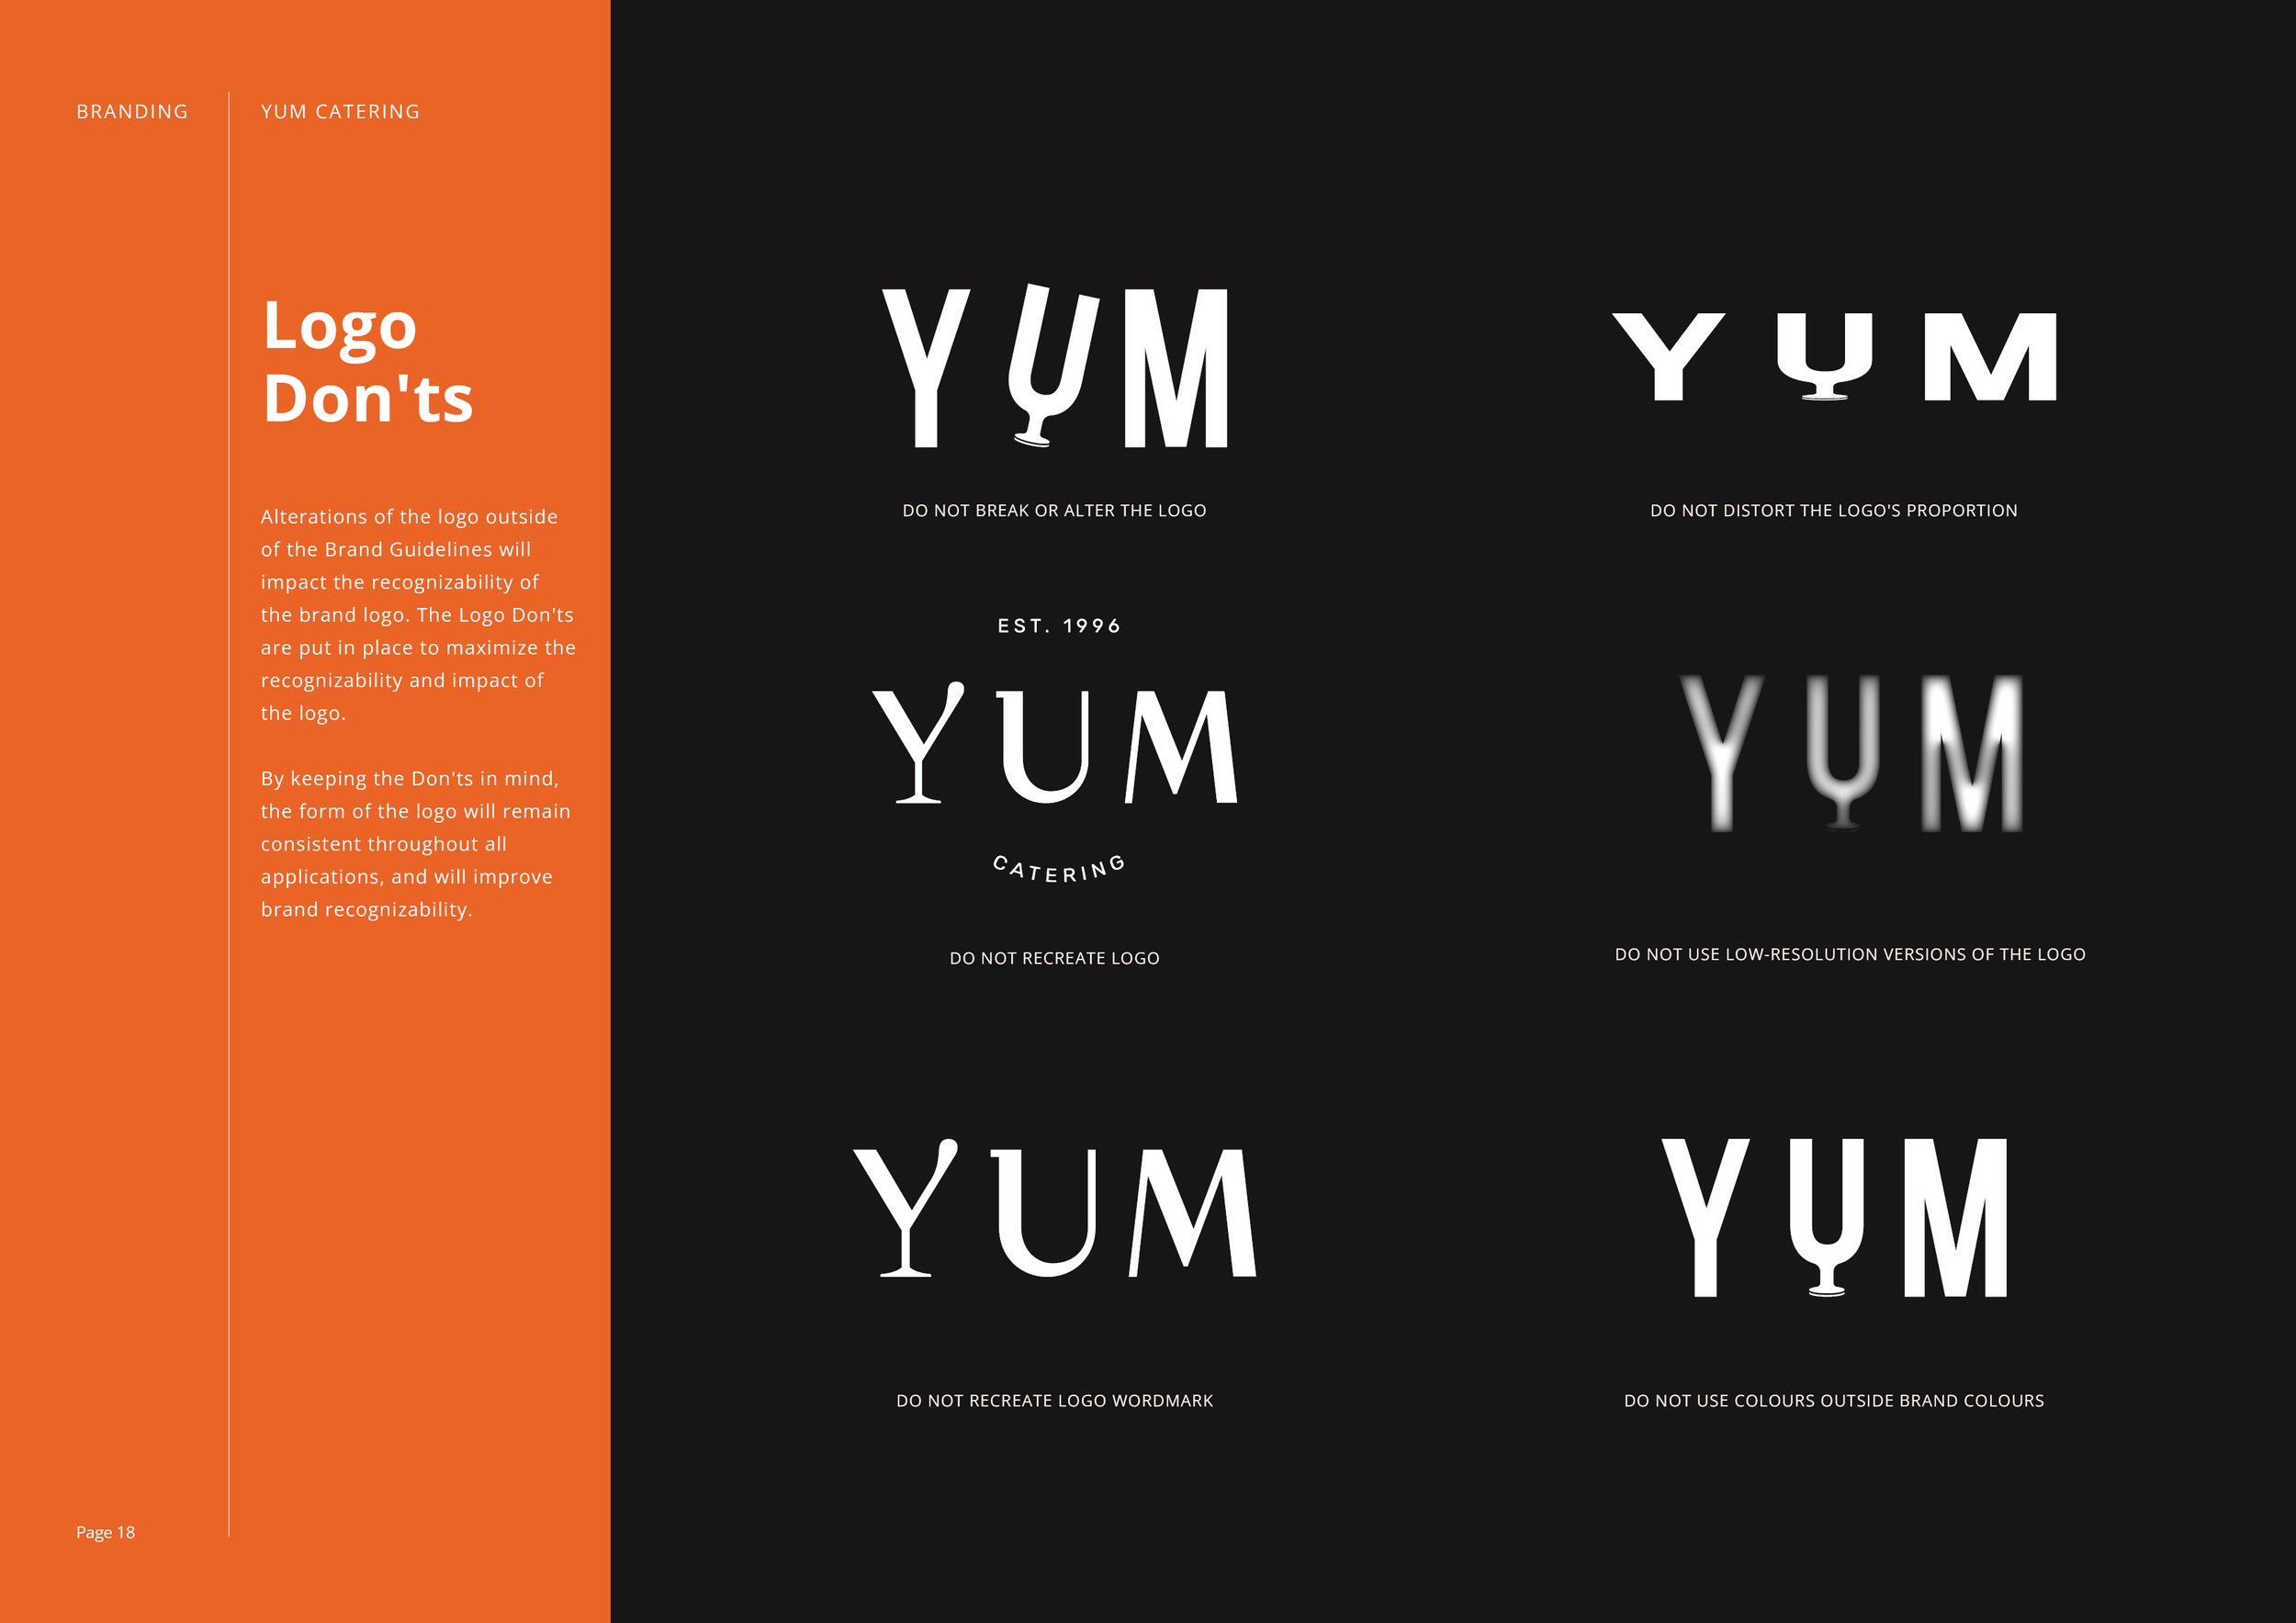 Yum Catering Brand and Logo Presentation18.jpg